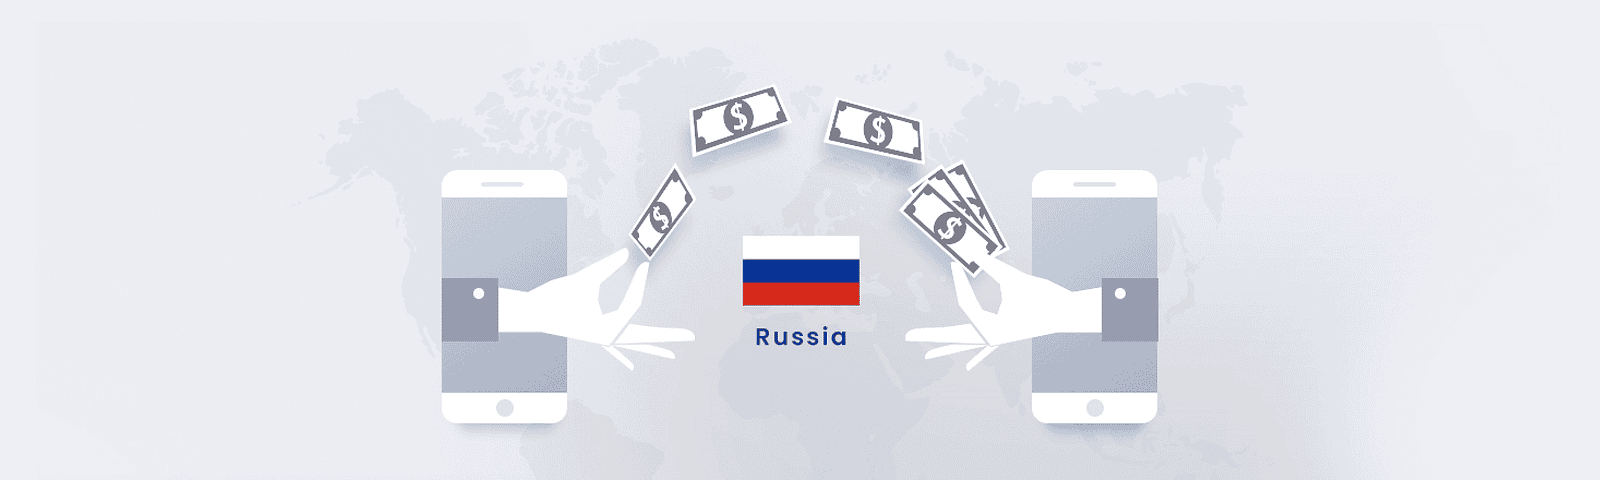 International Money Transfer Policy: Russia